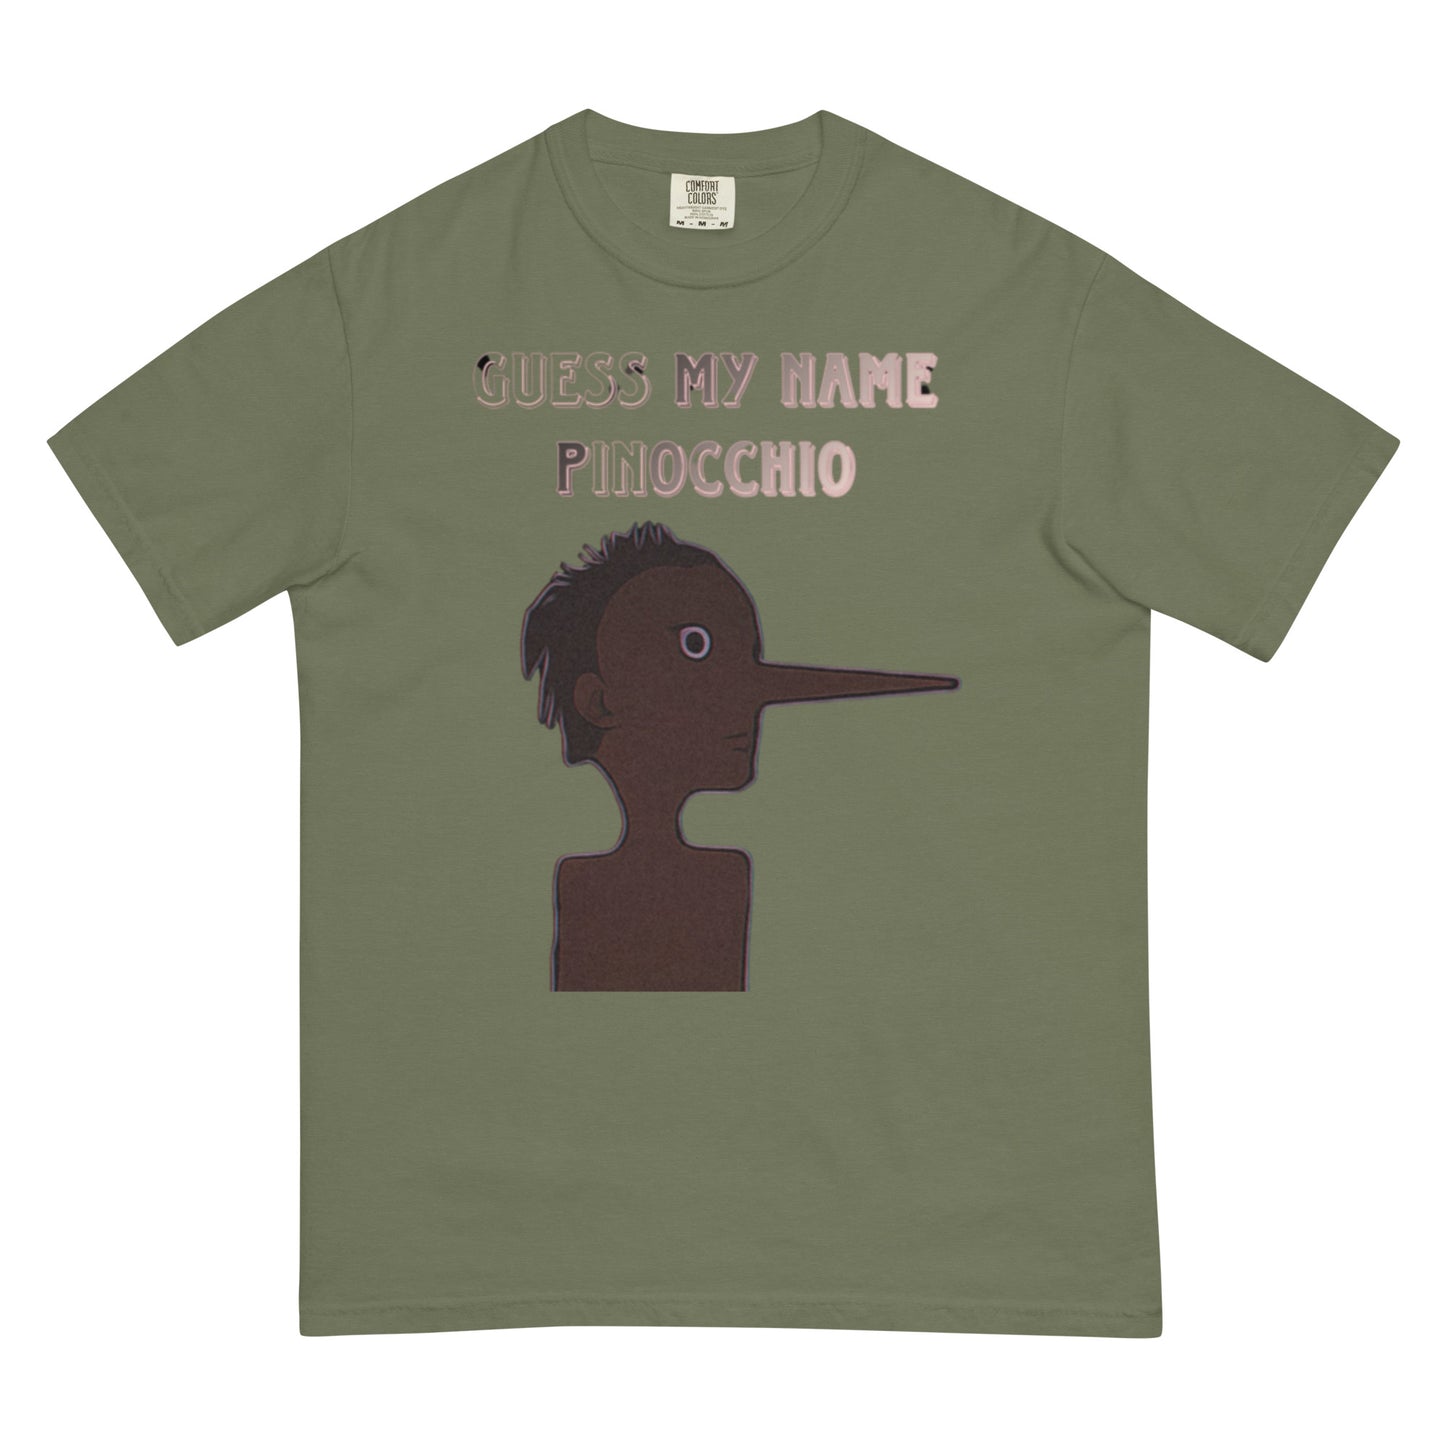 Pinocchio heavyweight t-shirt